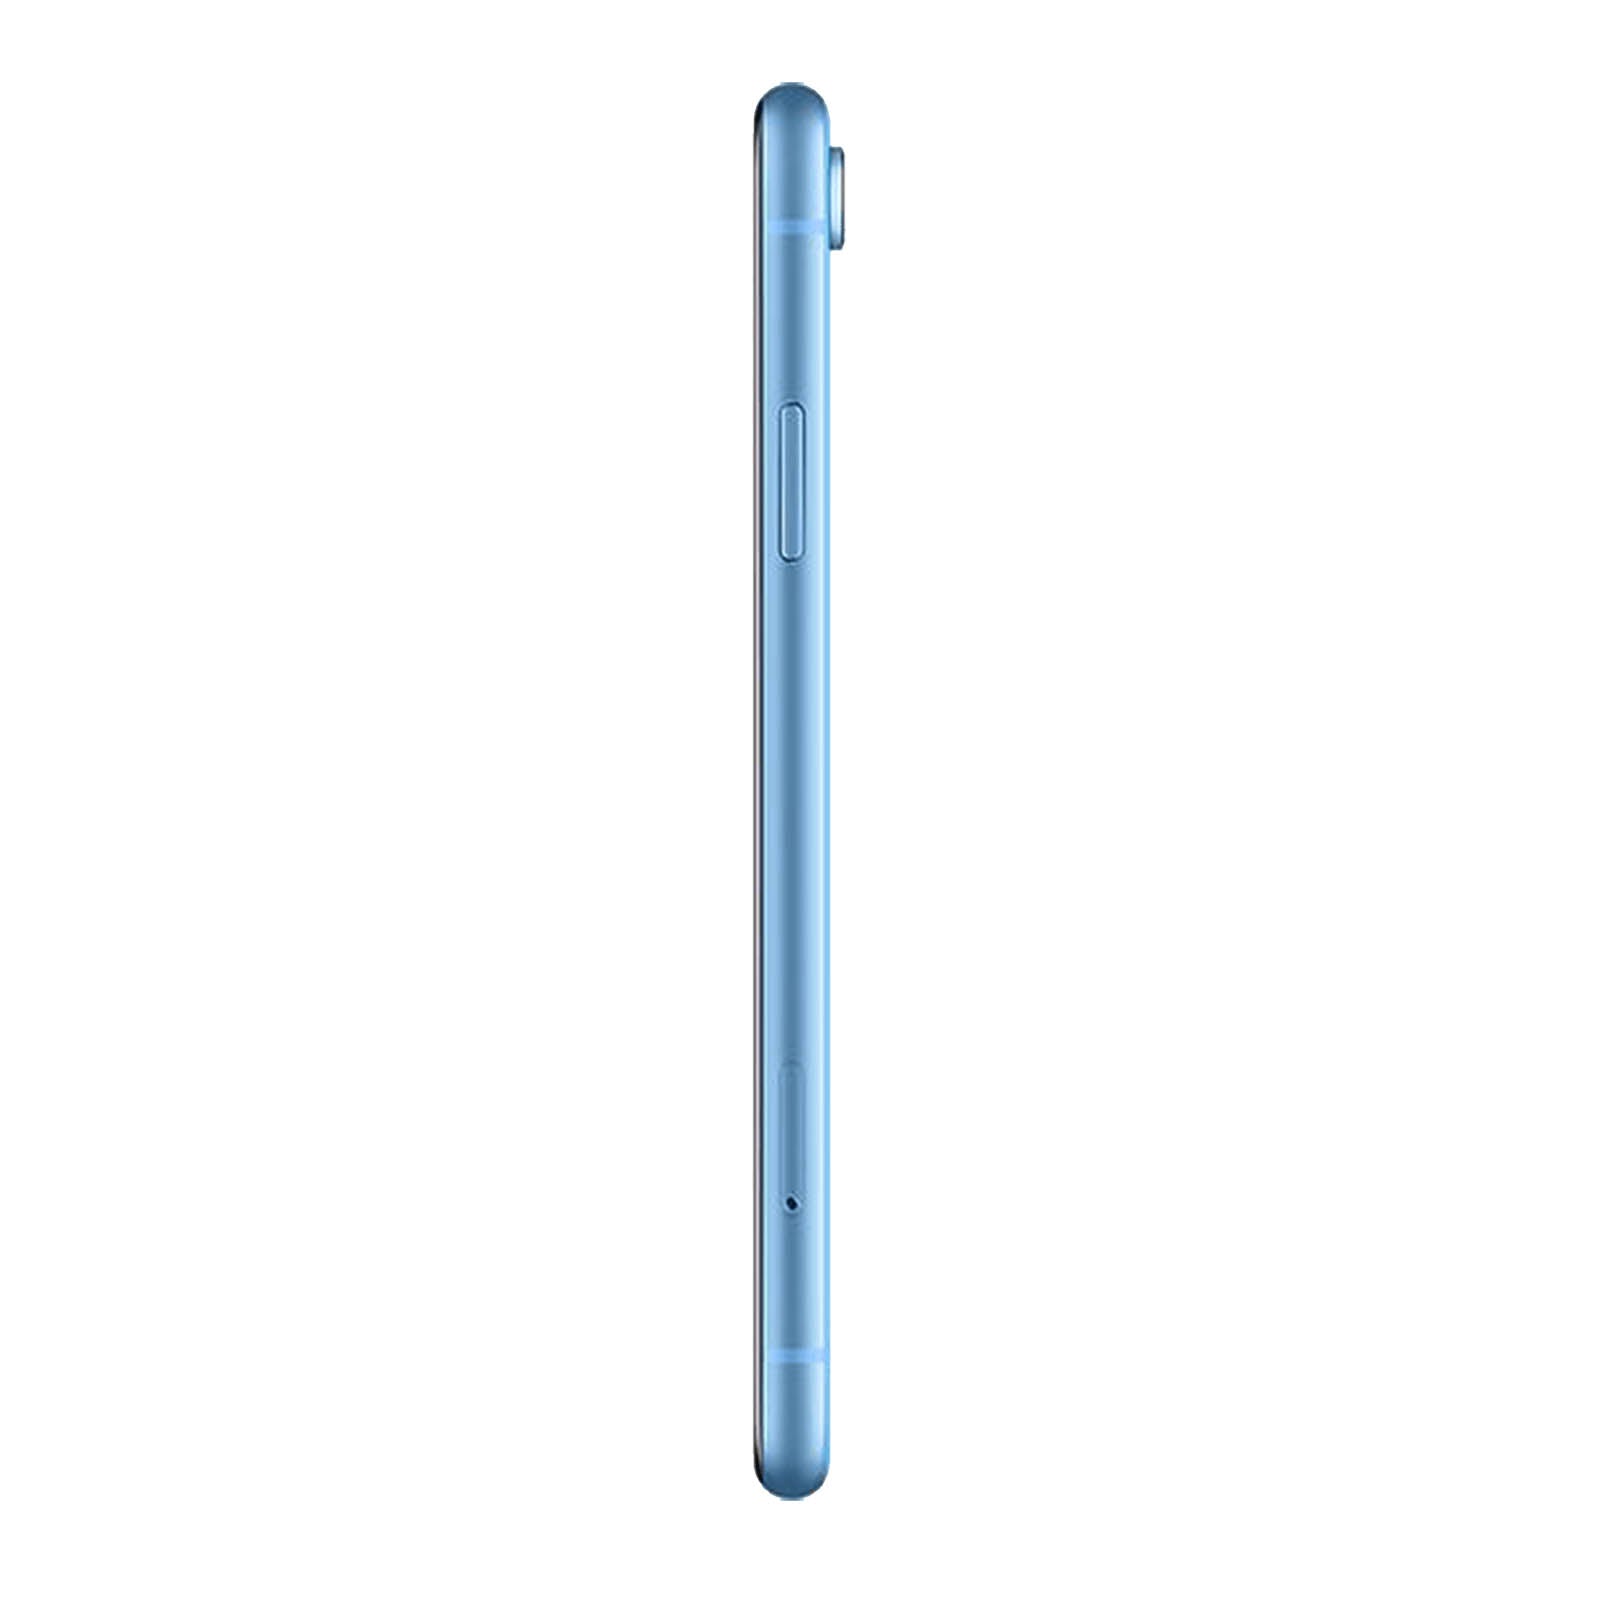 Apple iPhone XR 64GB Blue Pristine - AT&T